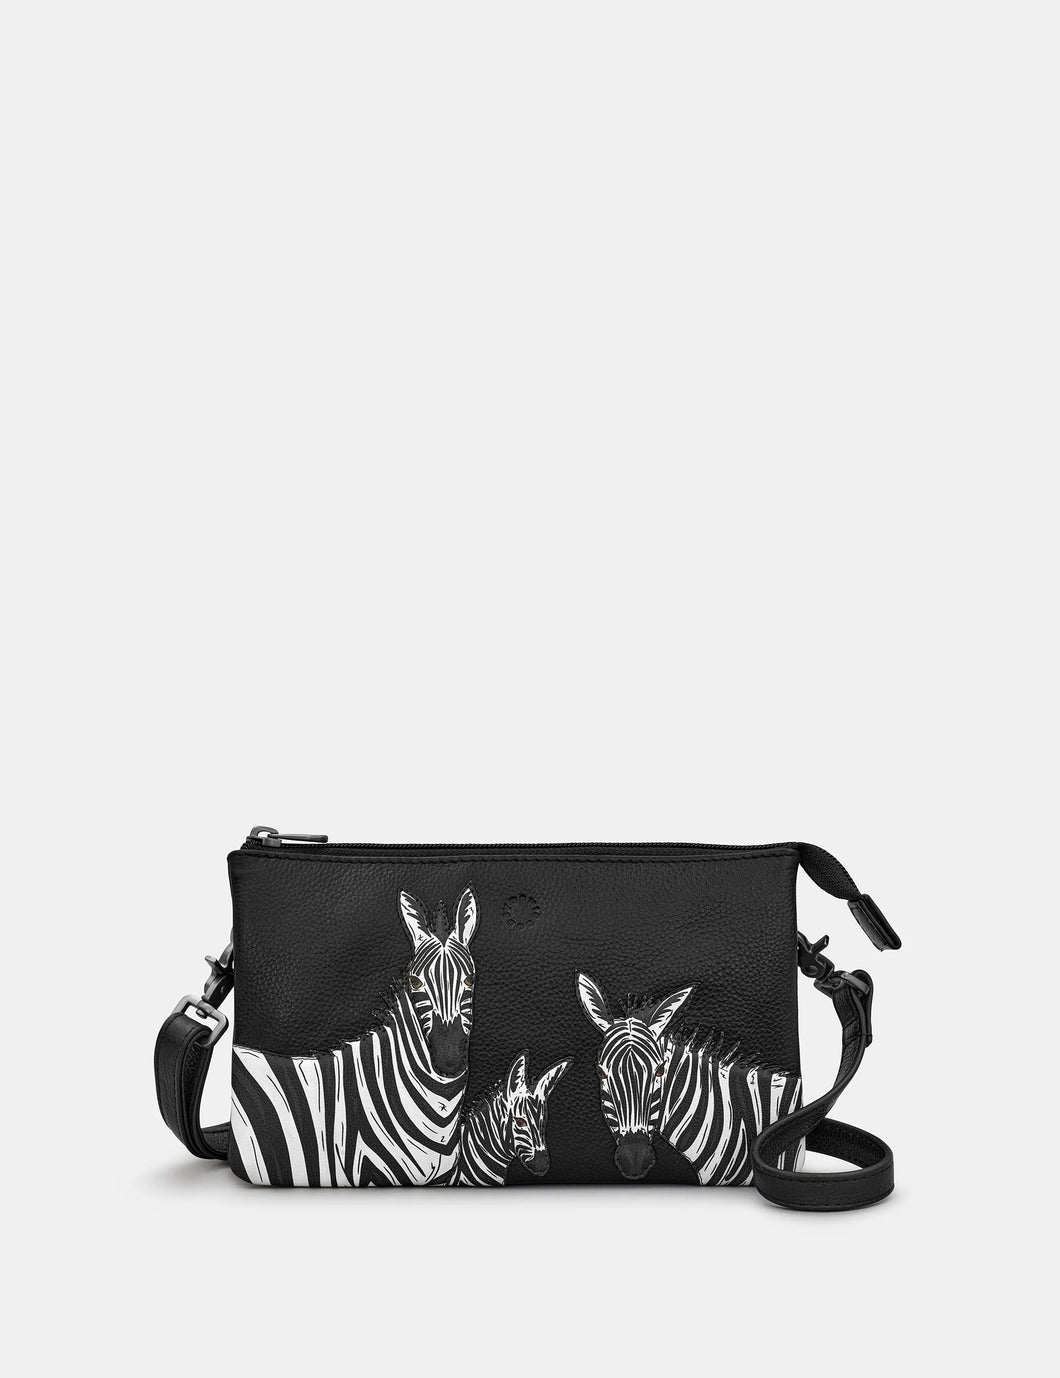 Zebra Cross Body Bag